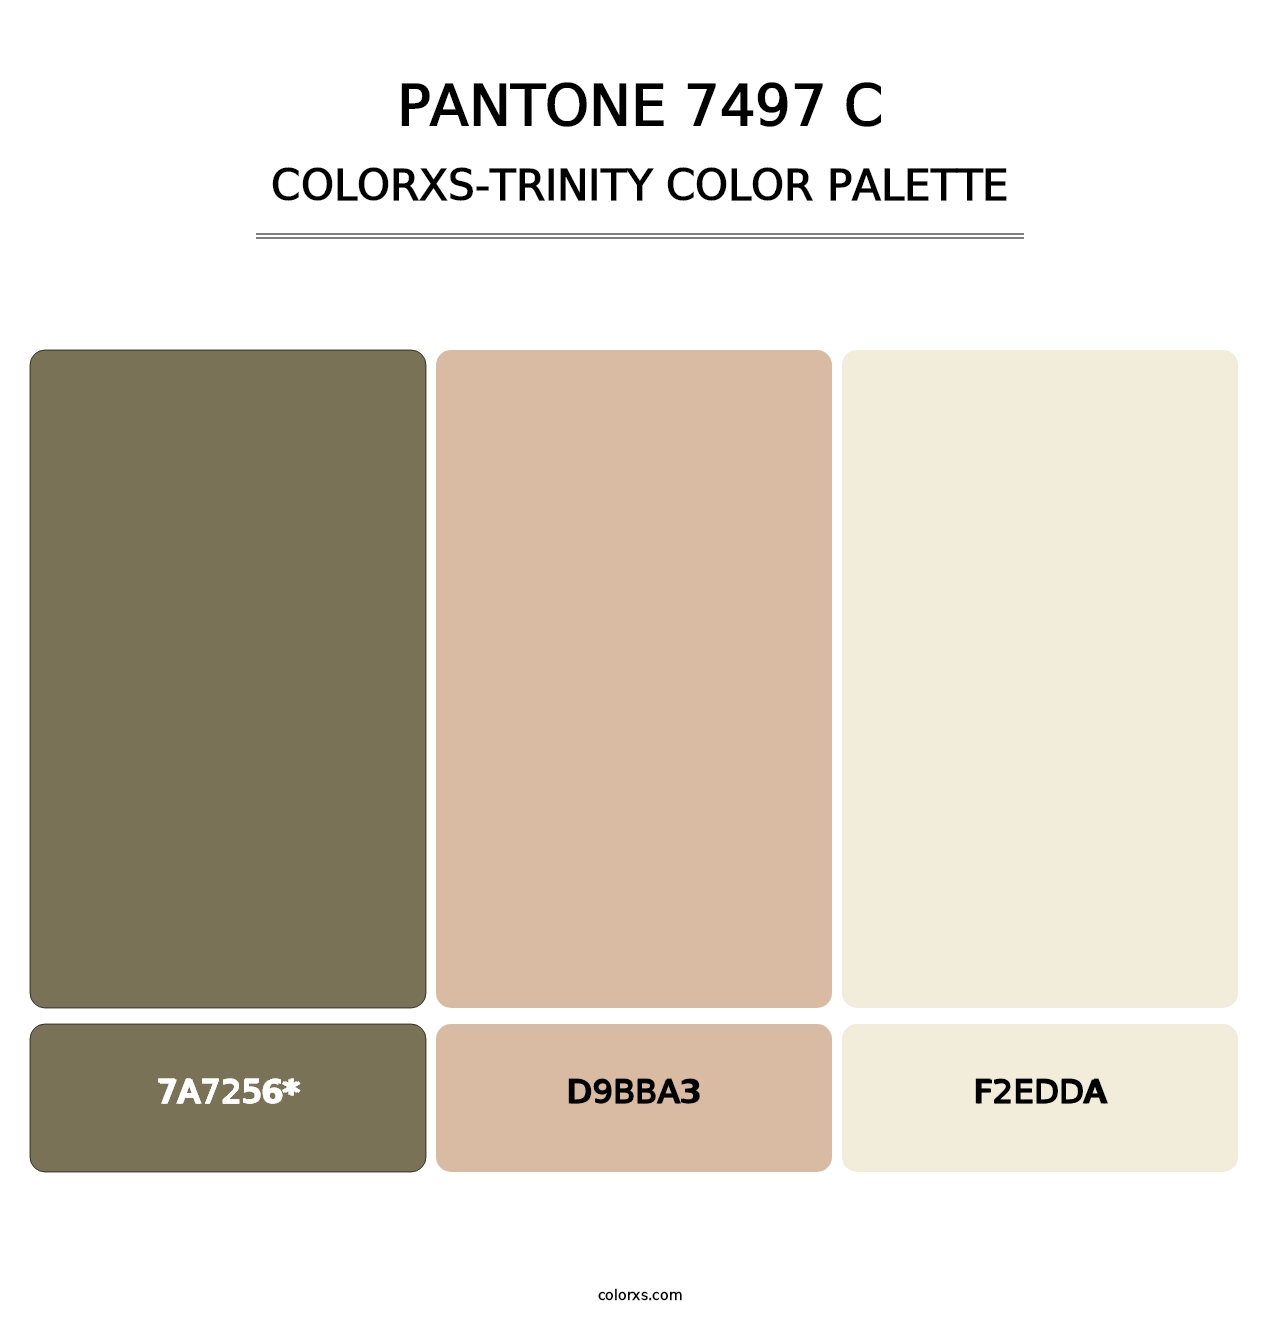 PANTONE 7497 C - Colorxs Trinity Palette